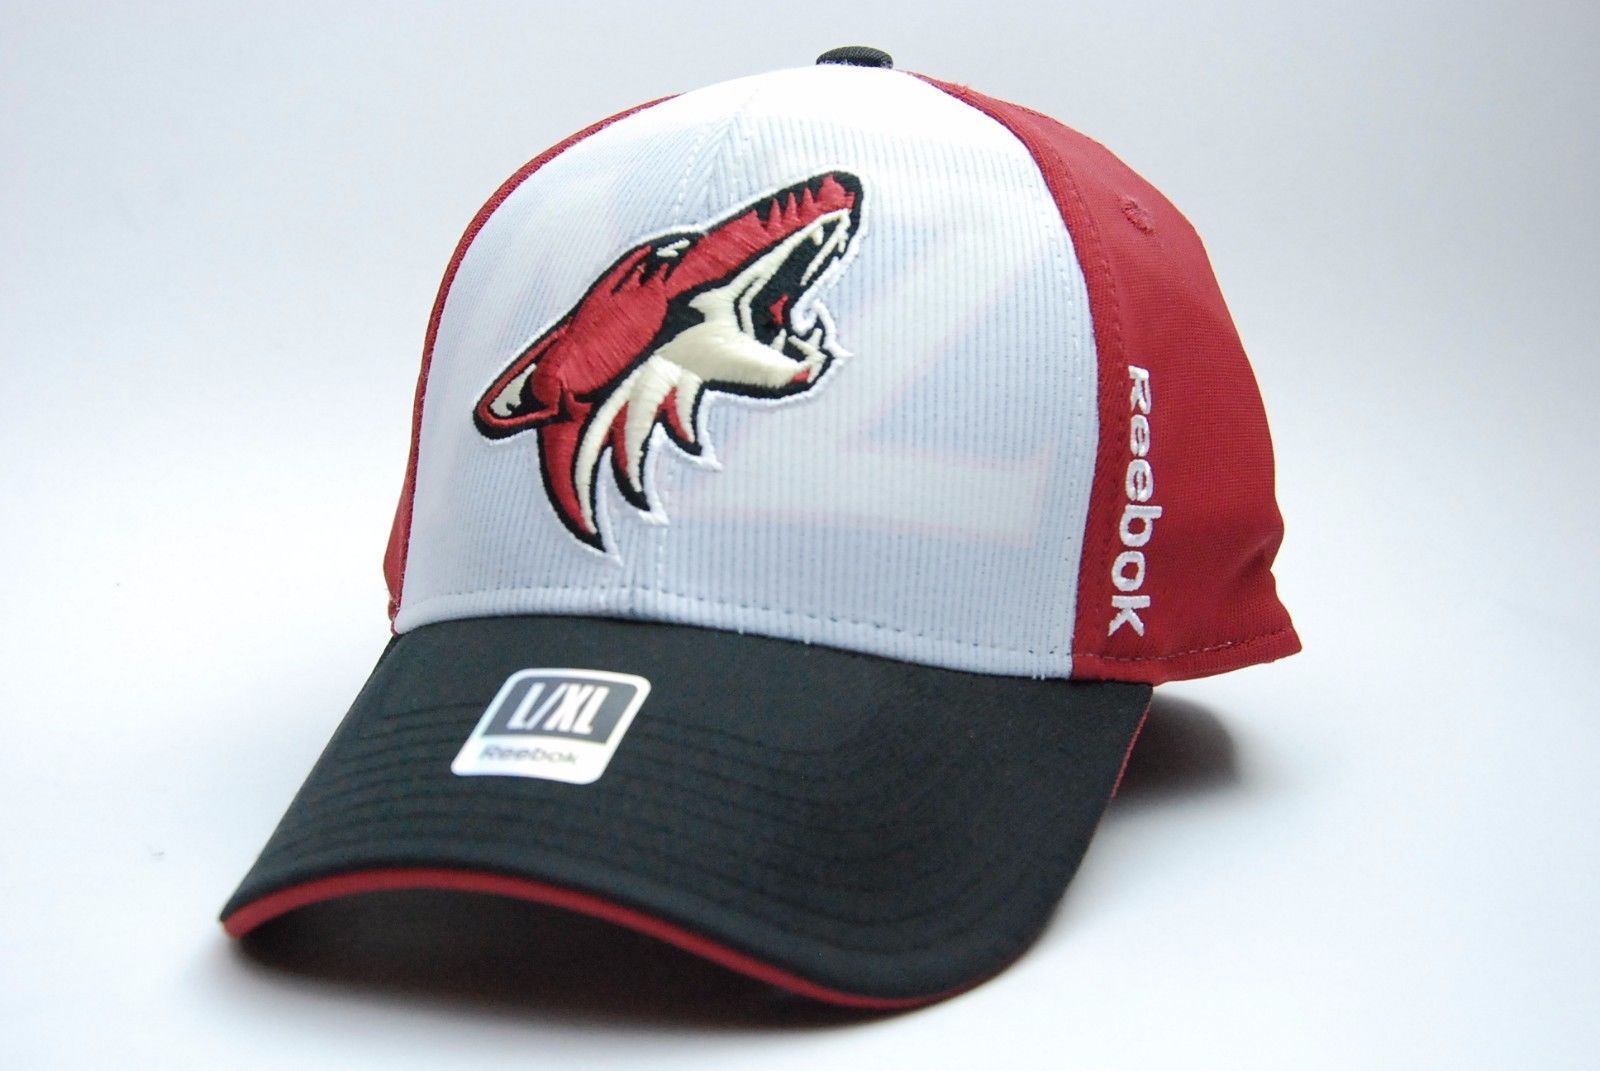 San Jose Sharks 2nd Season 2016 Adjustable - Reebok cap